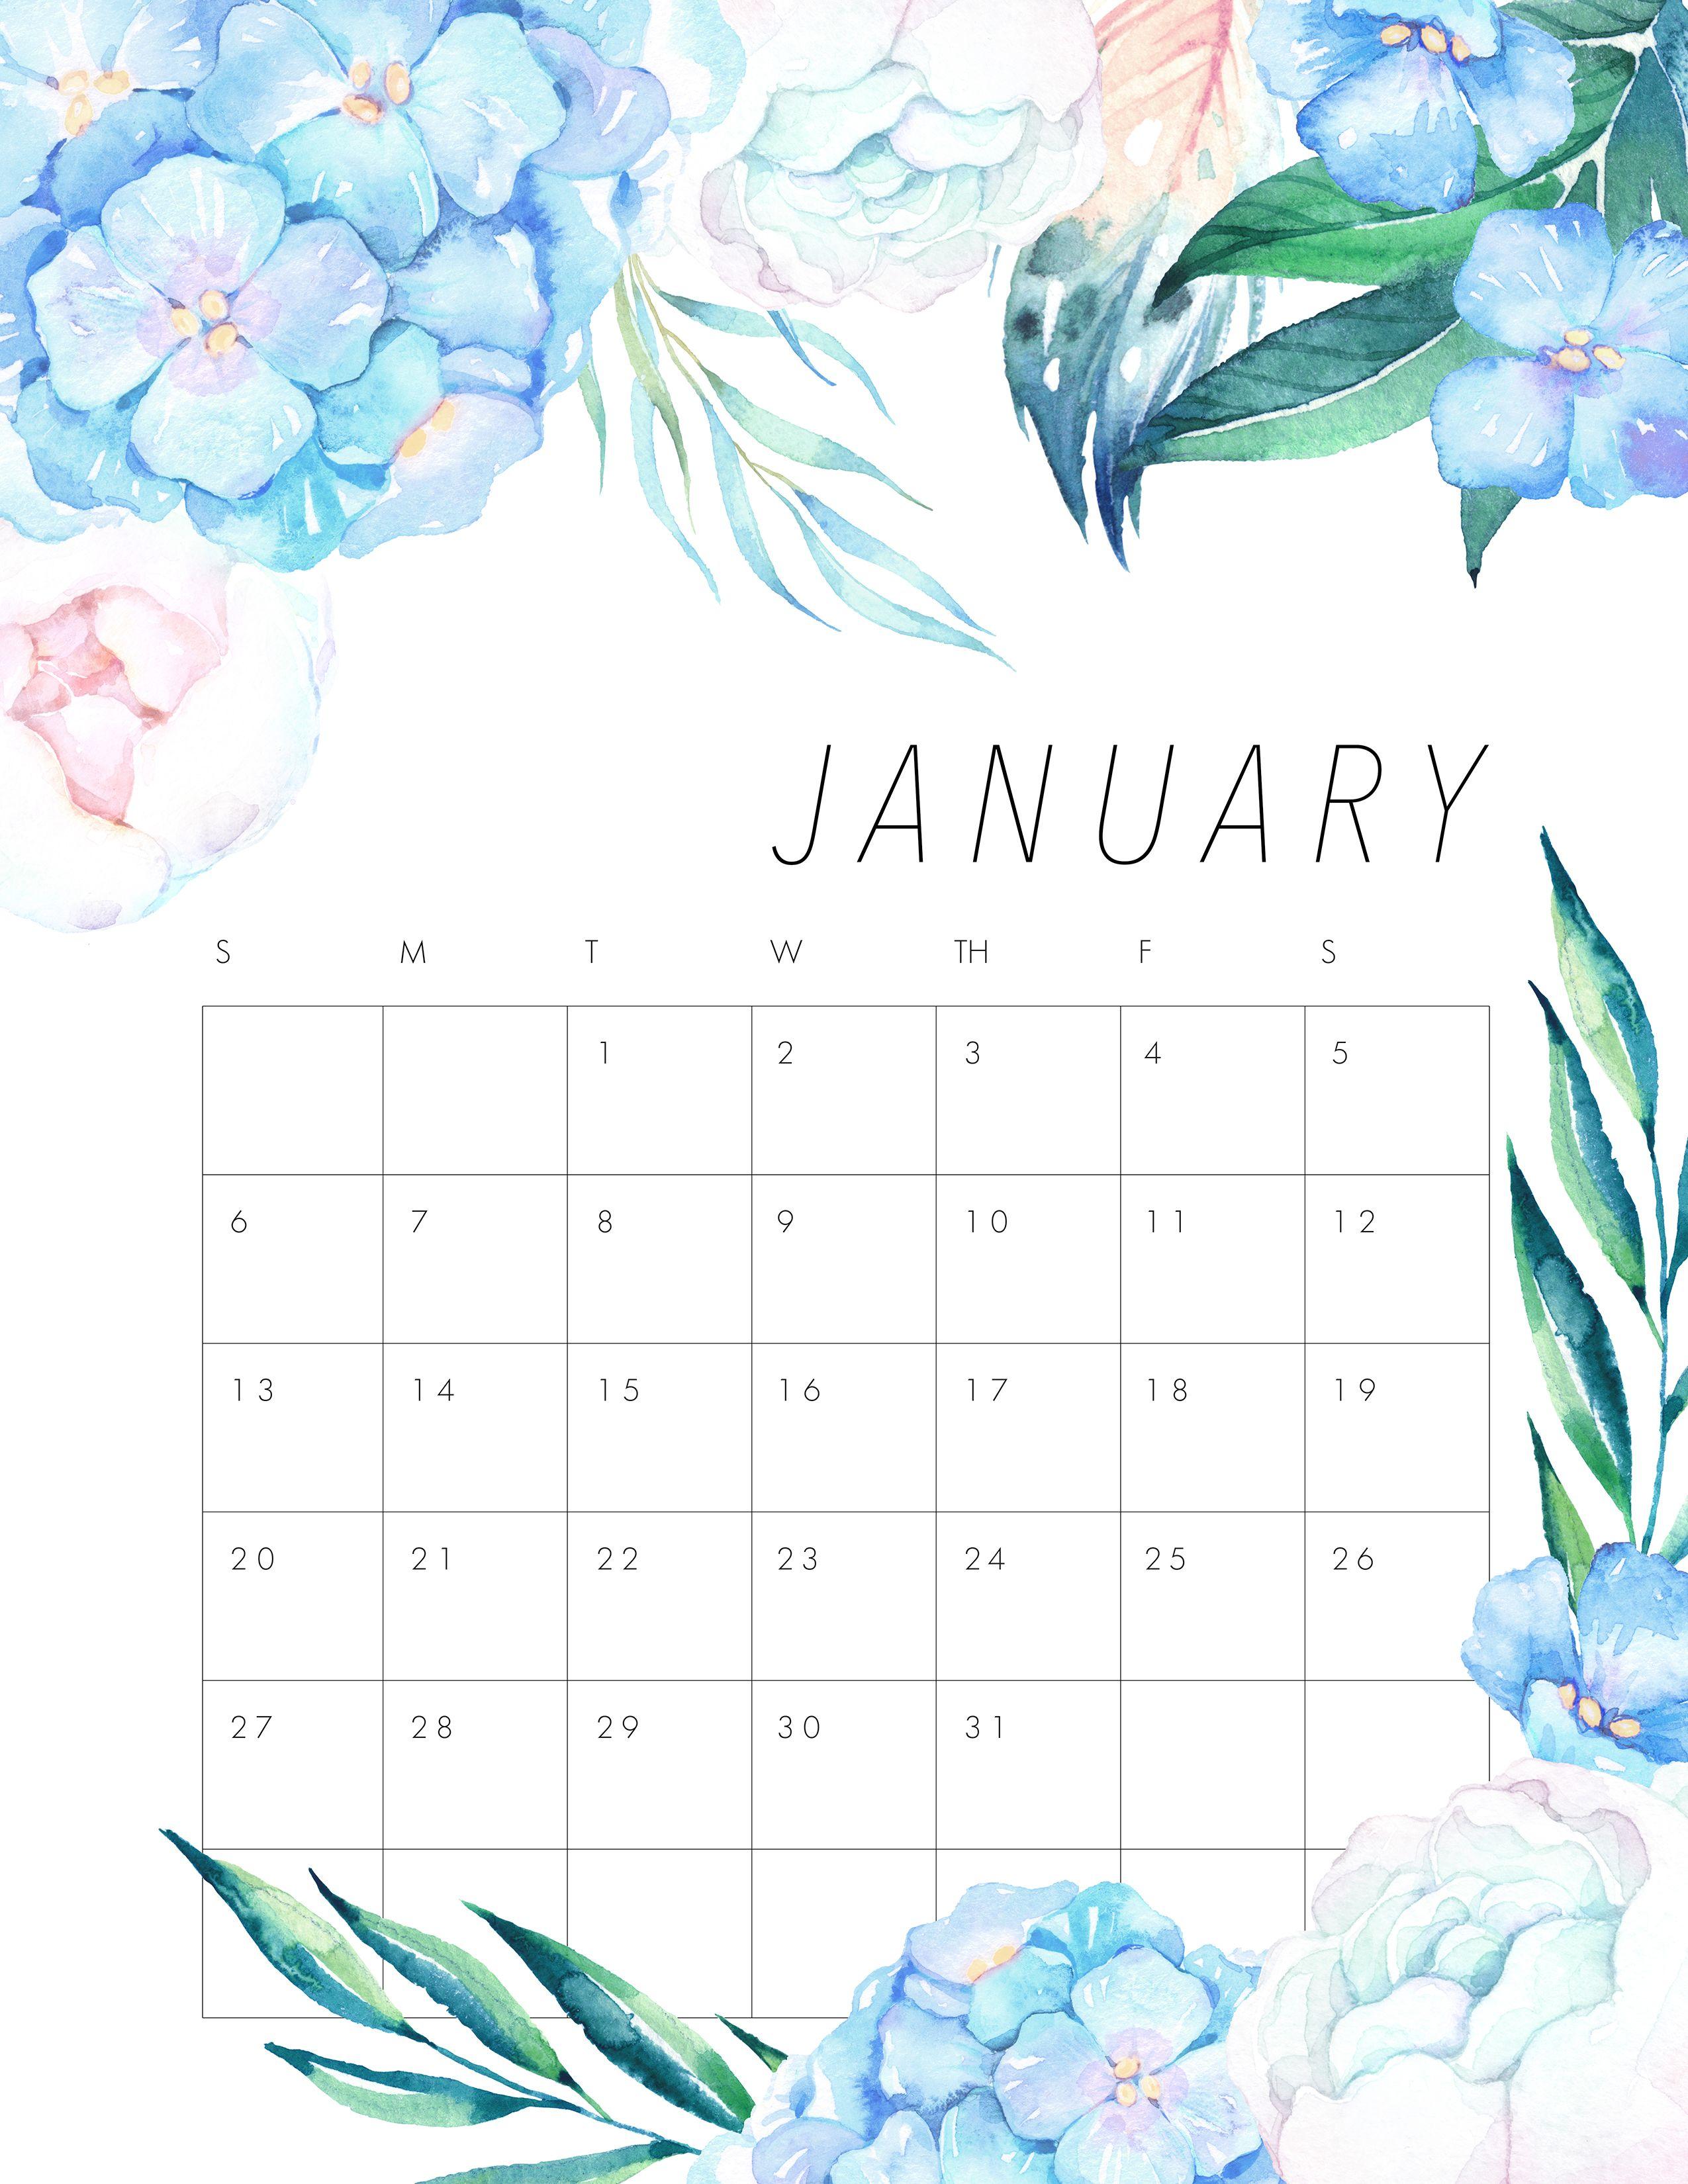 January 2019 Floral Calendar Desk Wallpaper Flower Image